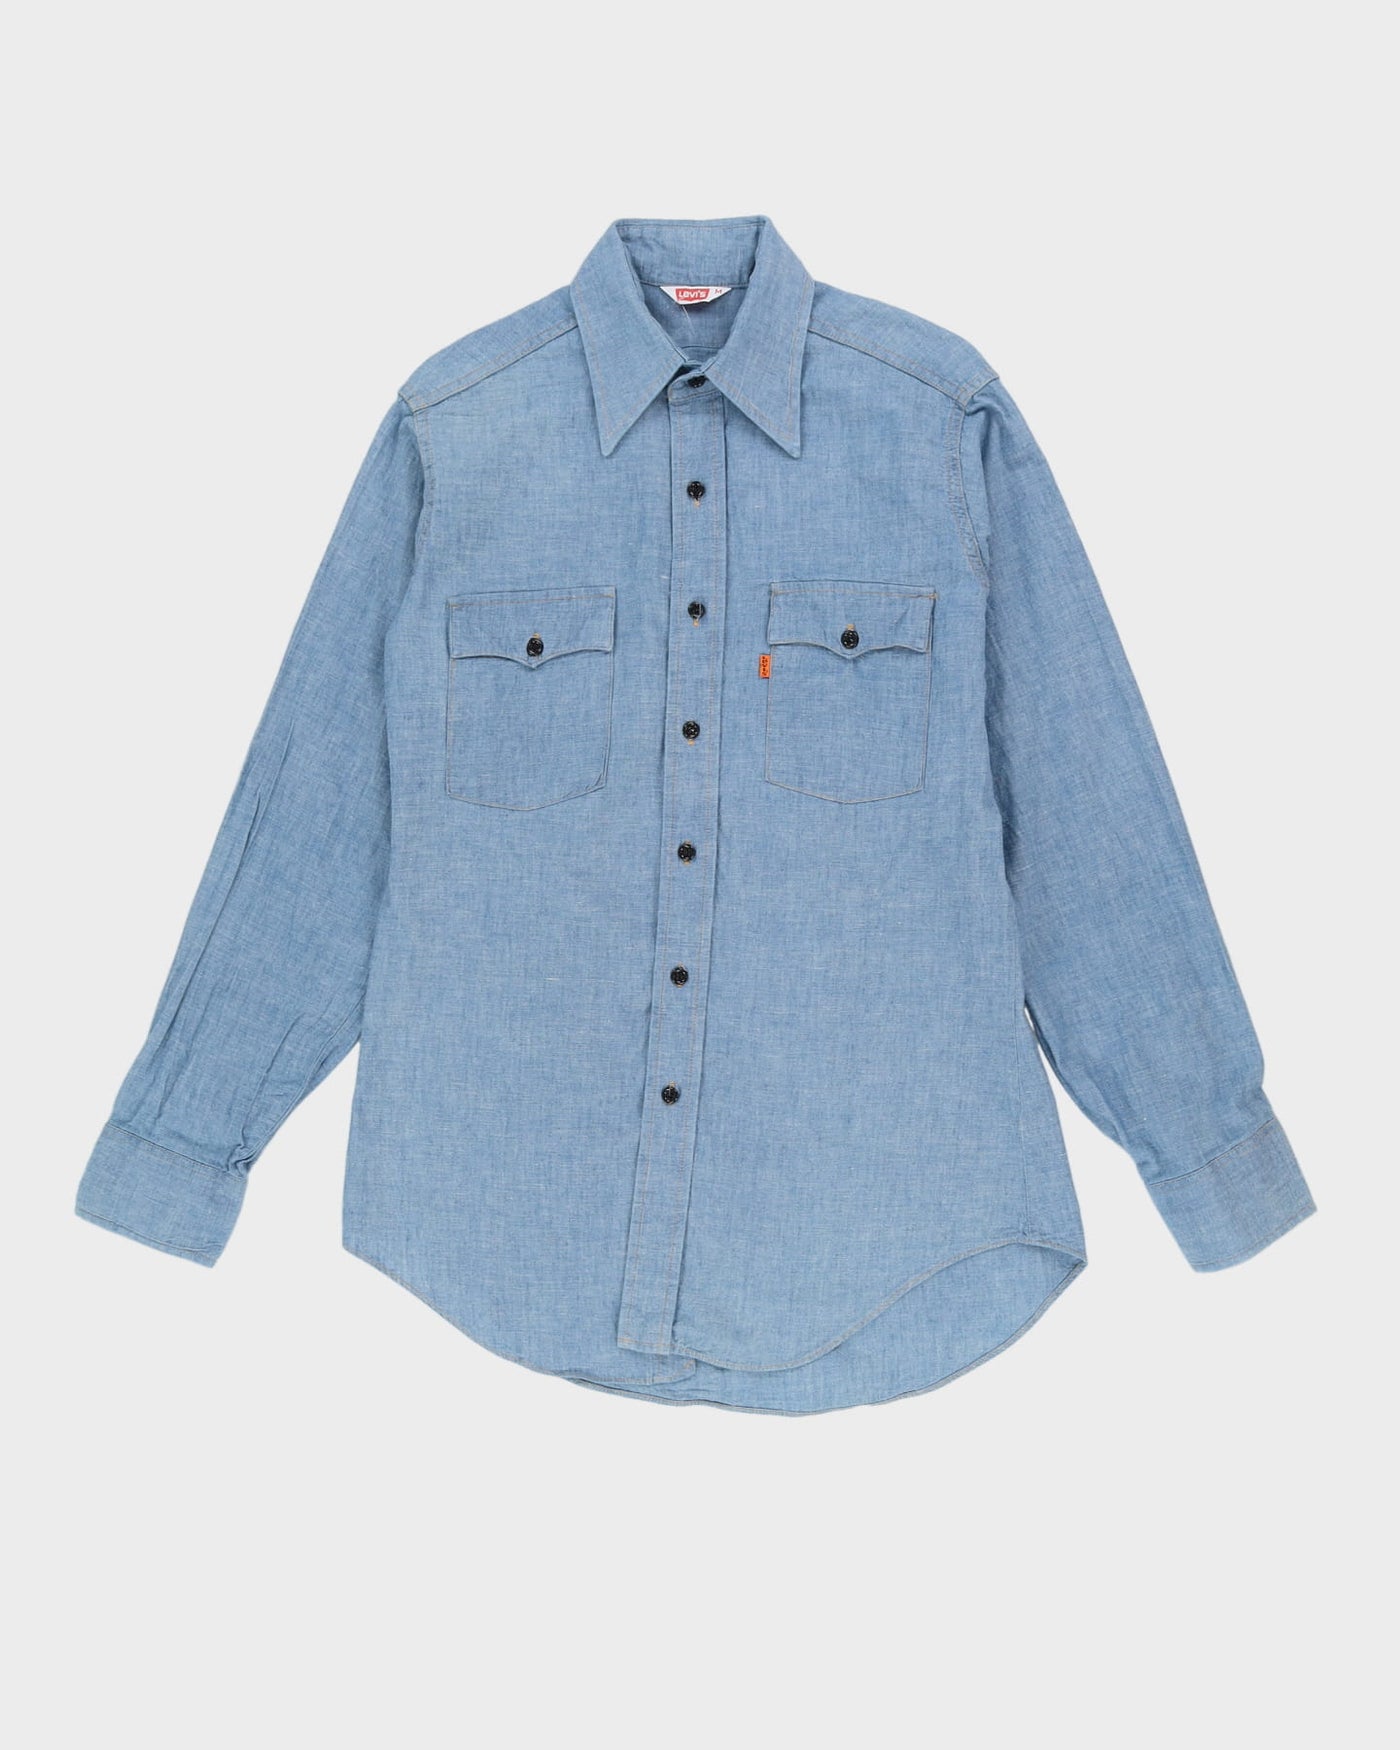 Vintage 80s Levi's Blue Lightweight Denim Shirt - M